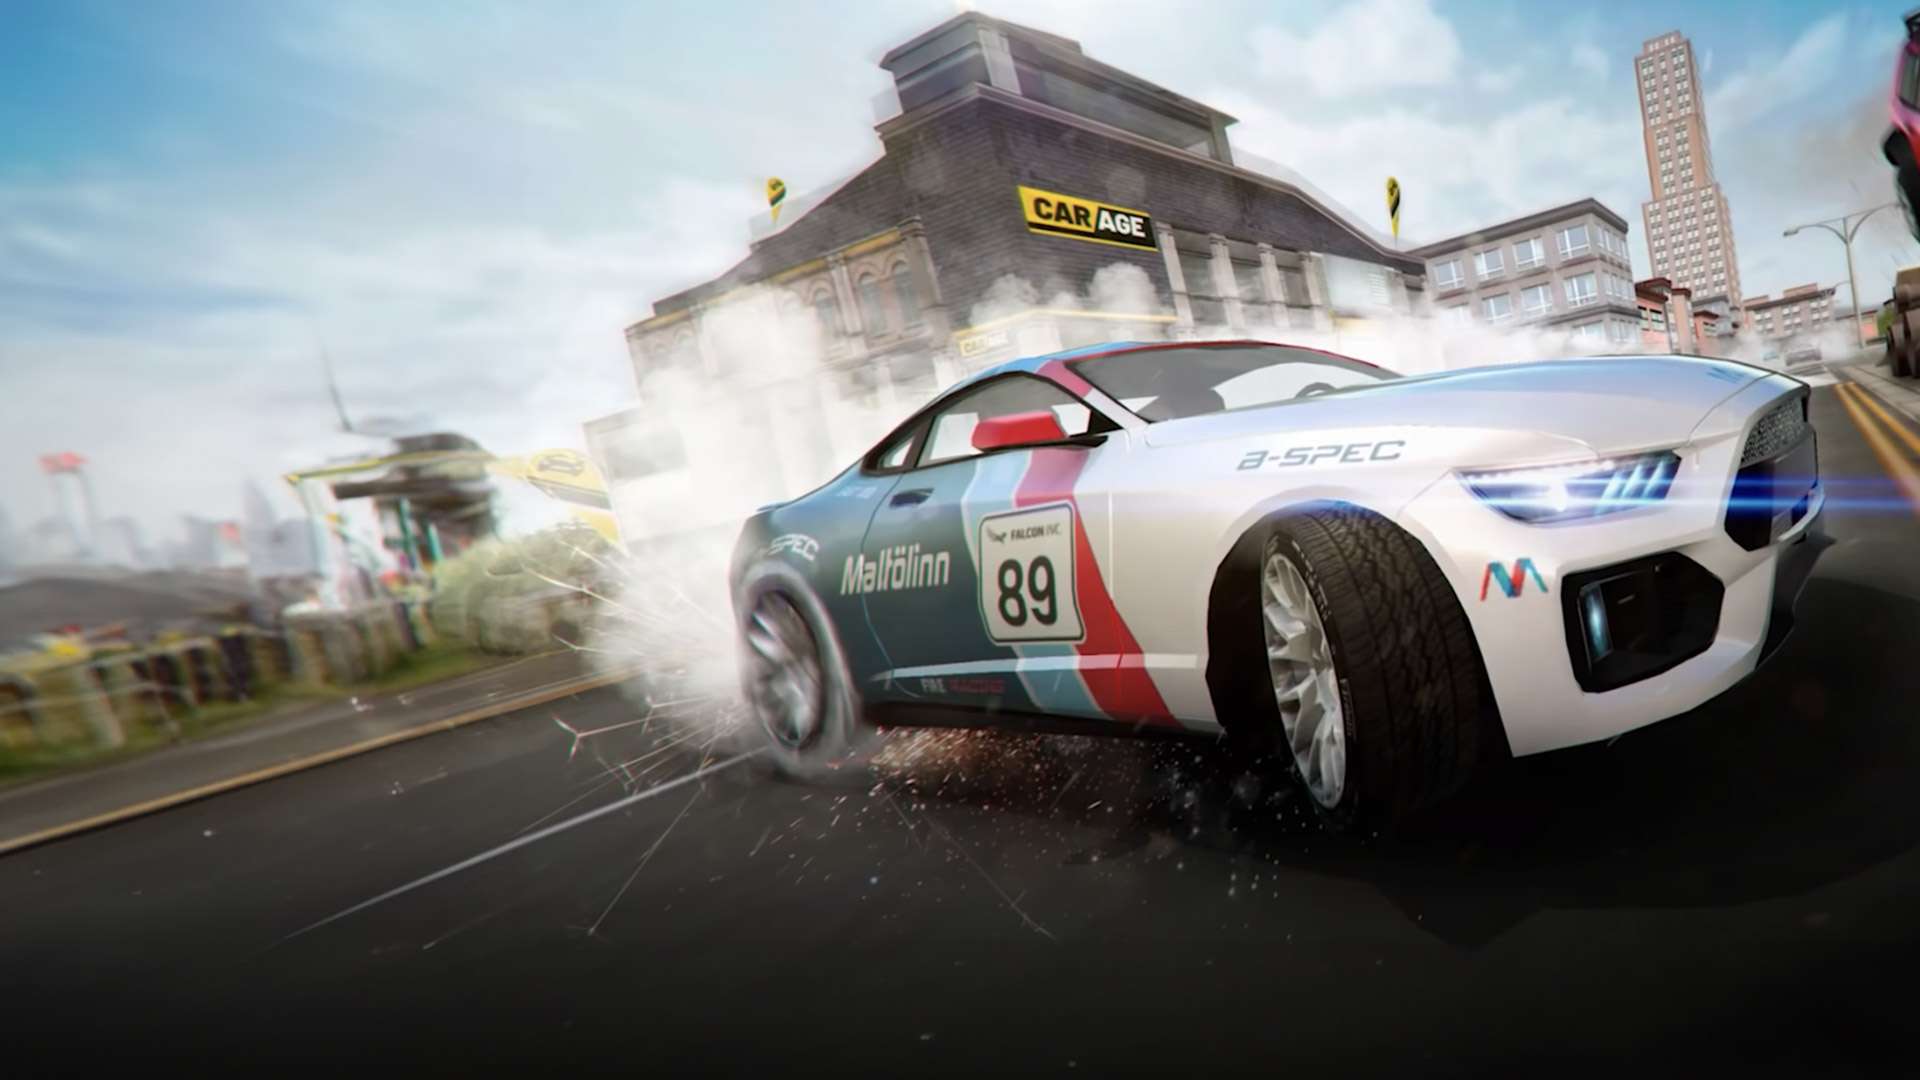 Buy Extreme Car Drift Simulator - Microsoft Store